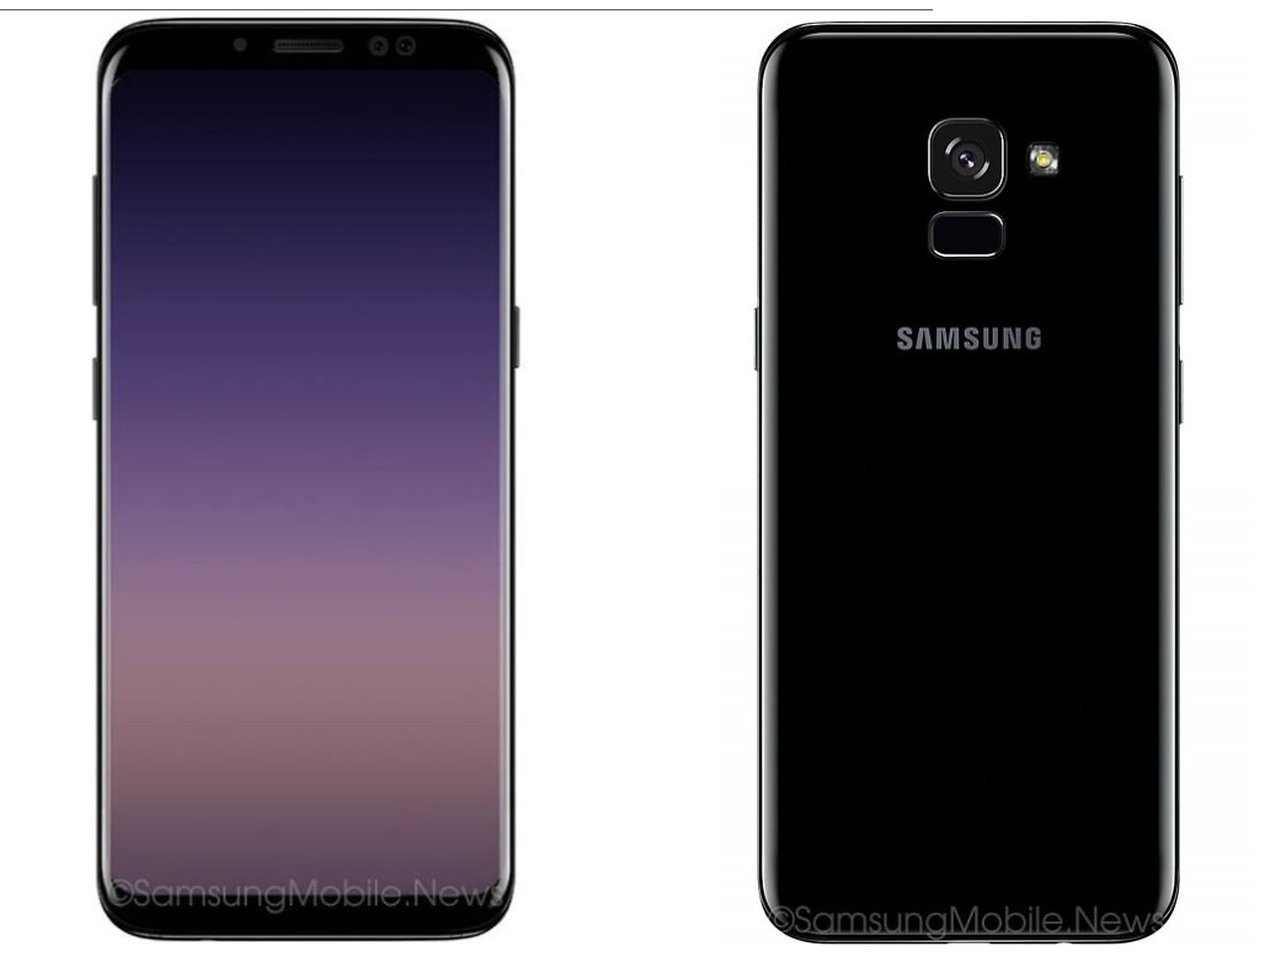 Телефон Samsung a8